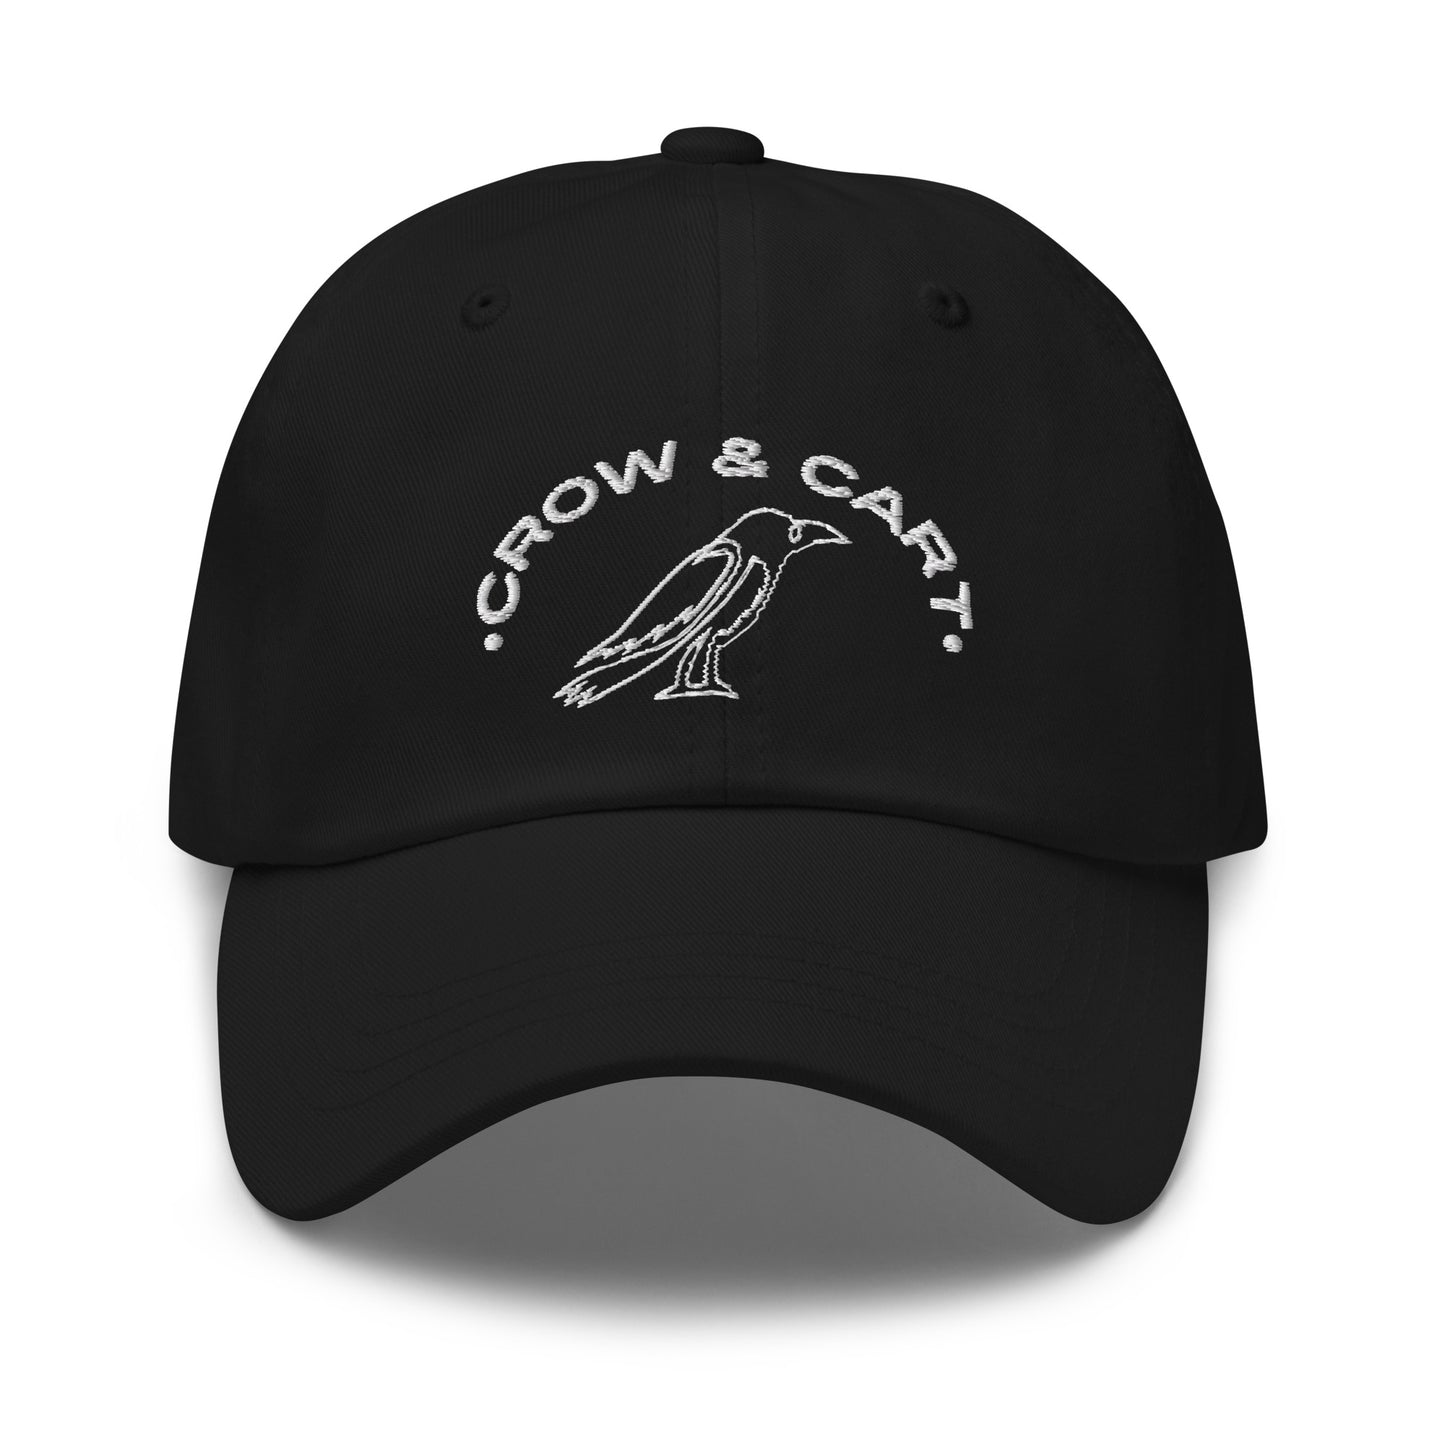 Crow & Cart Dad Hat. White Stitching.